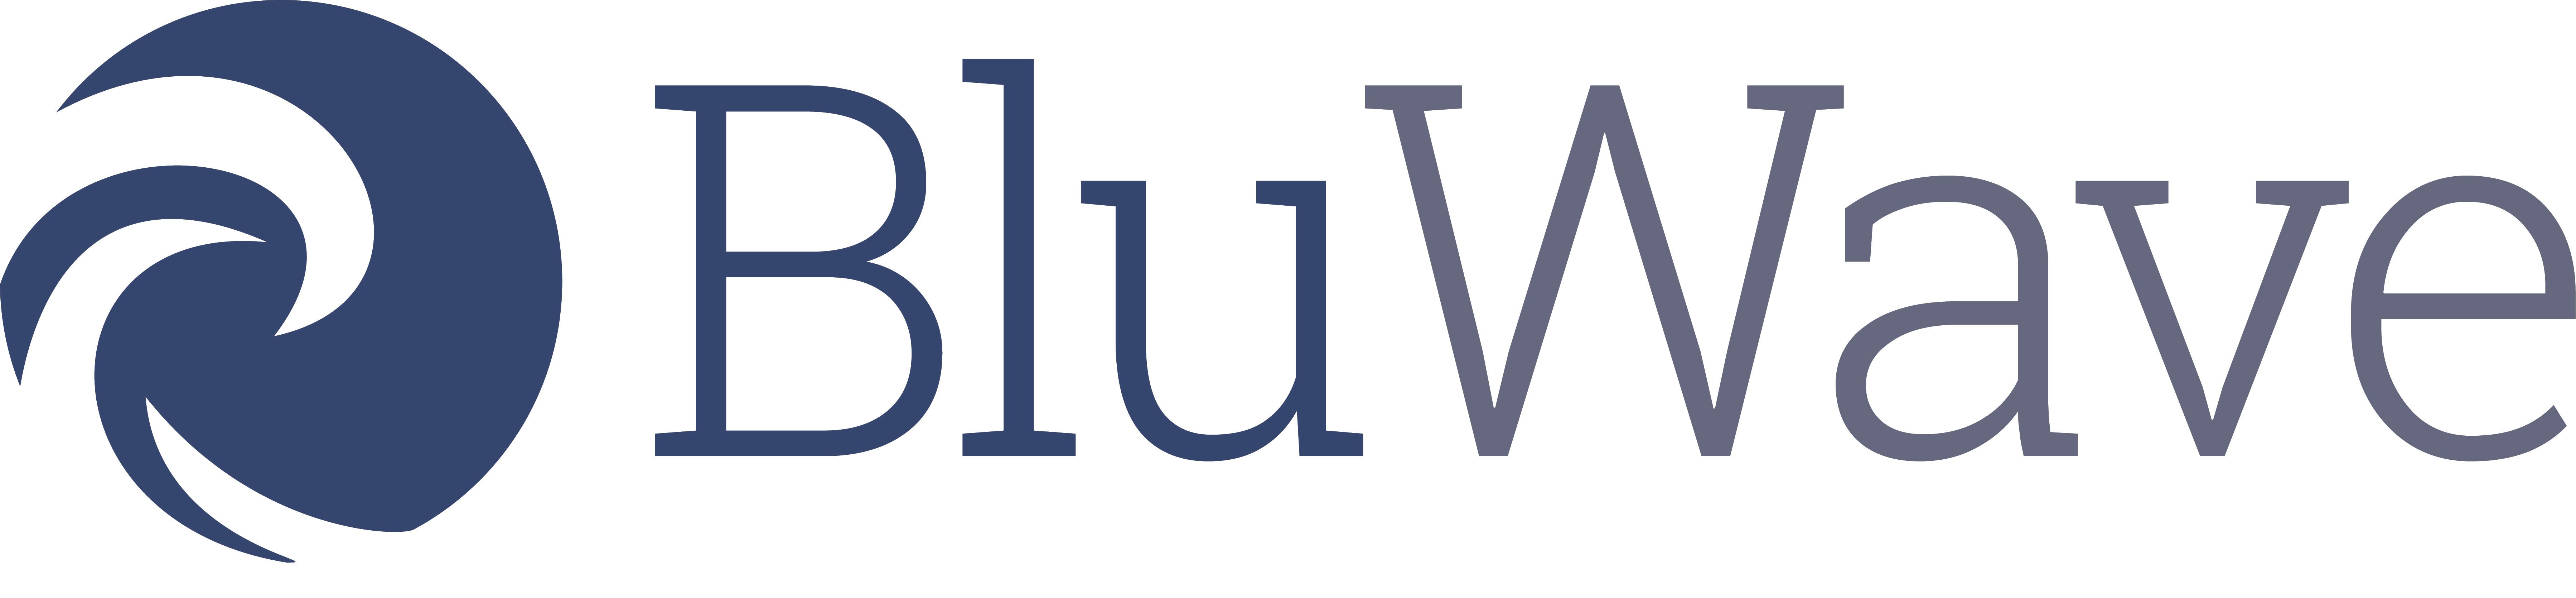 BluWave logo_final